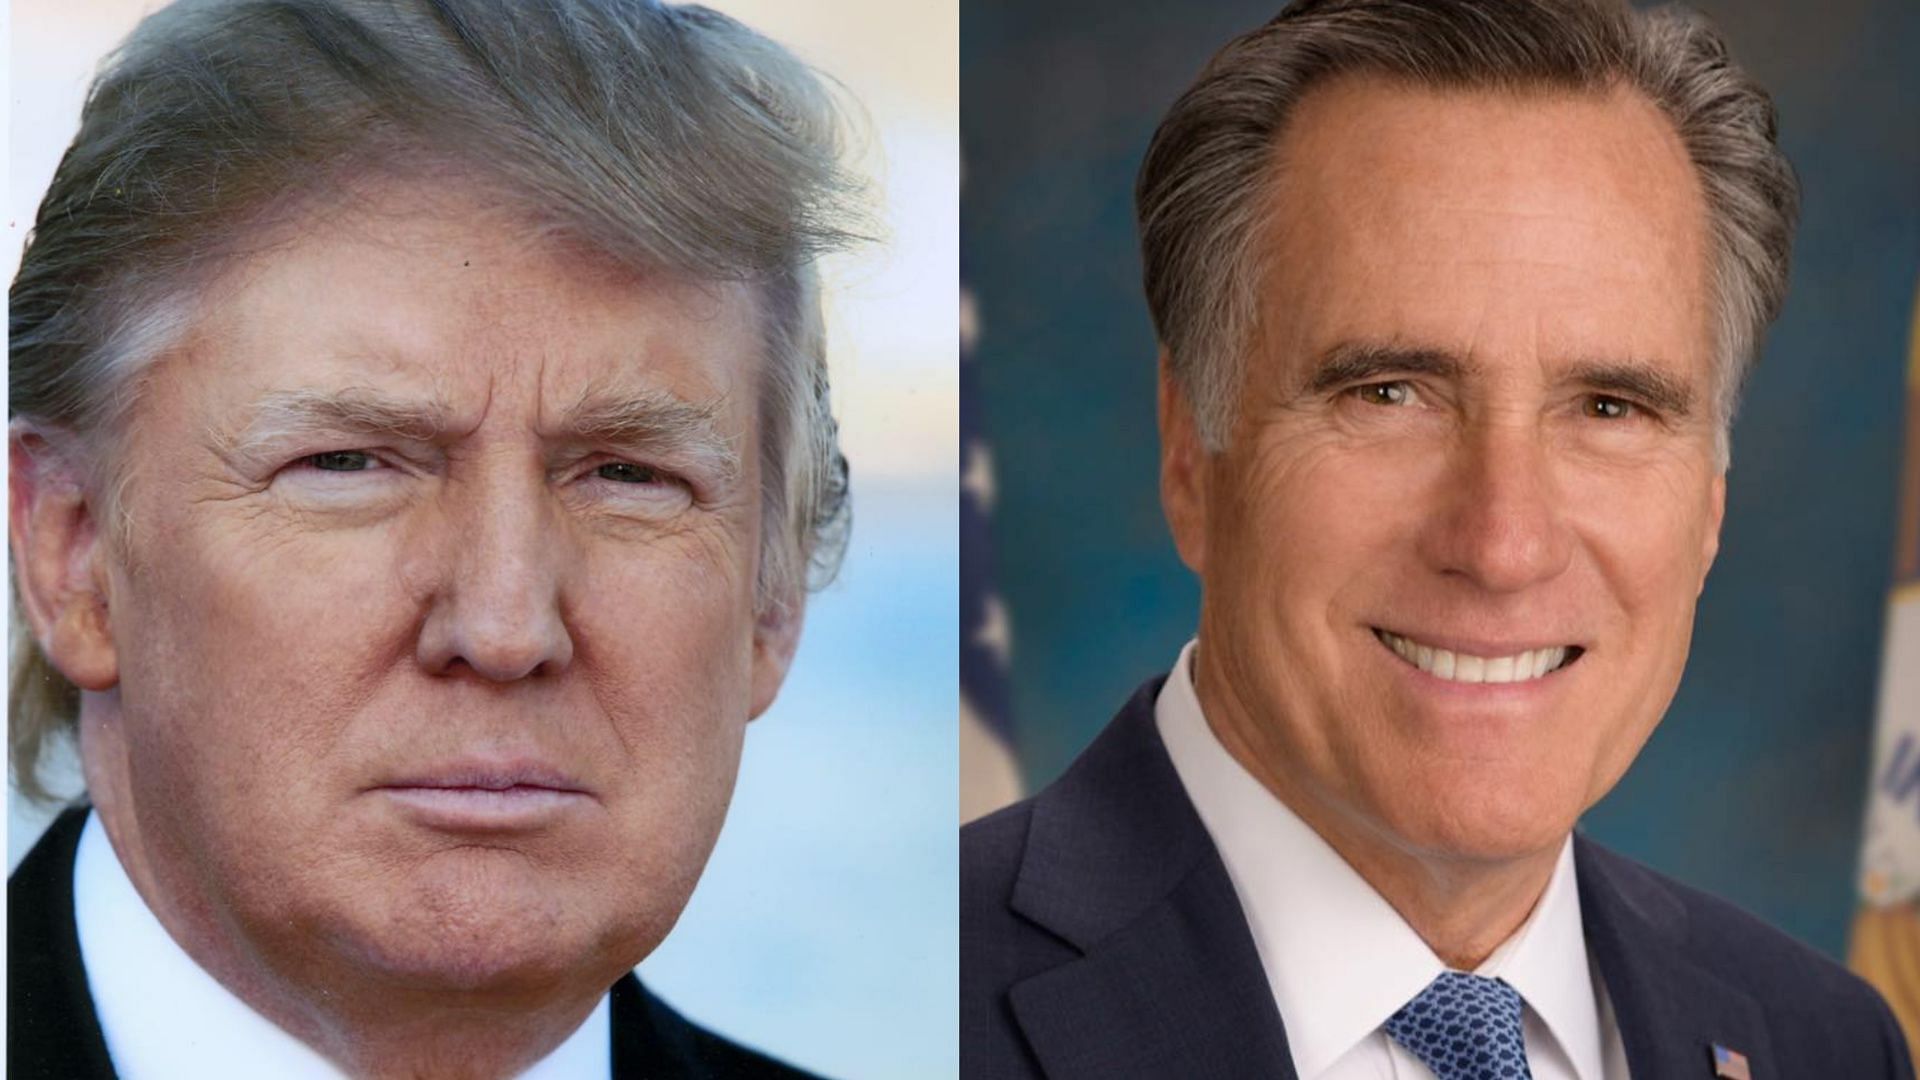 Donald Trump answered to Mitt Romney